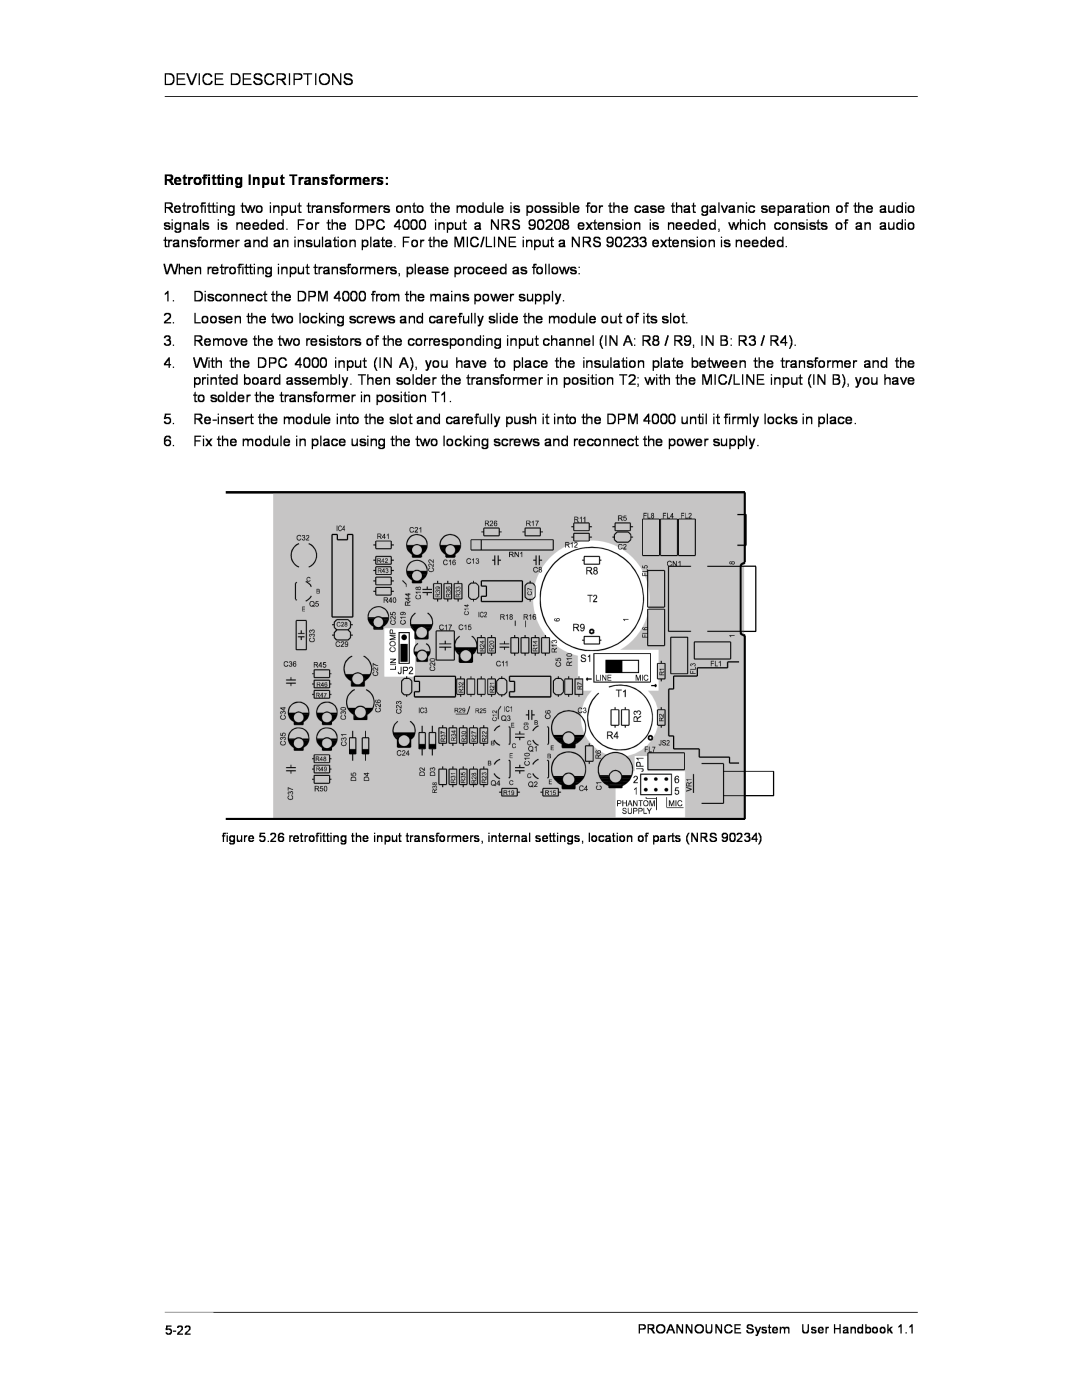 Dynacord DPM 4000 manual PROANNOUNCE System User Handbook 